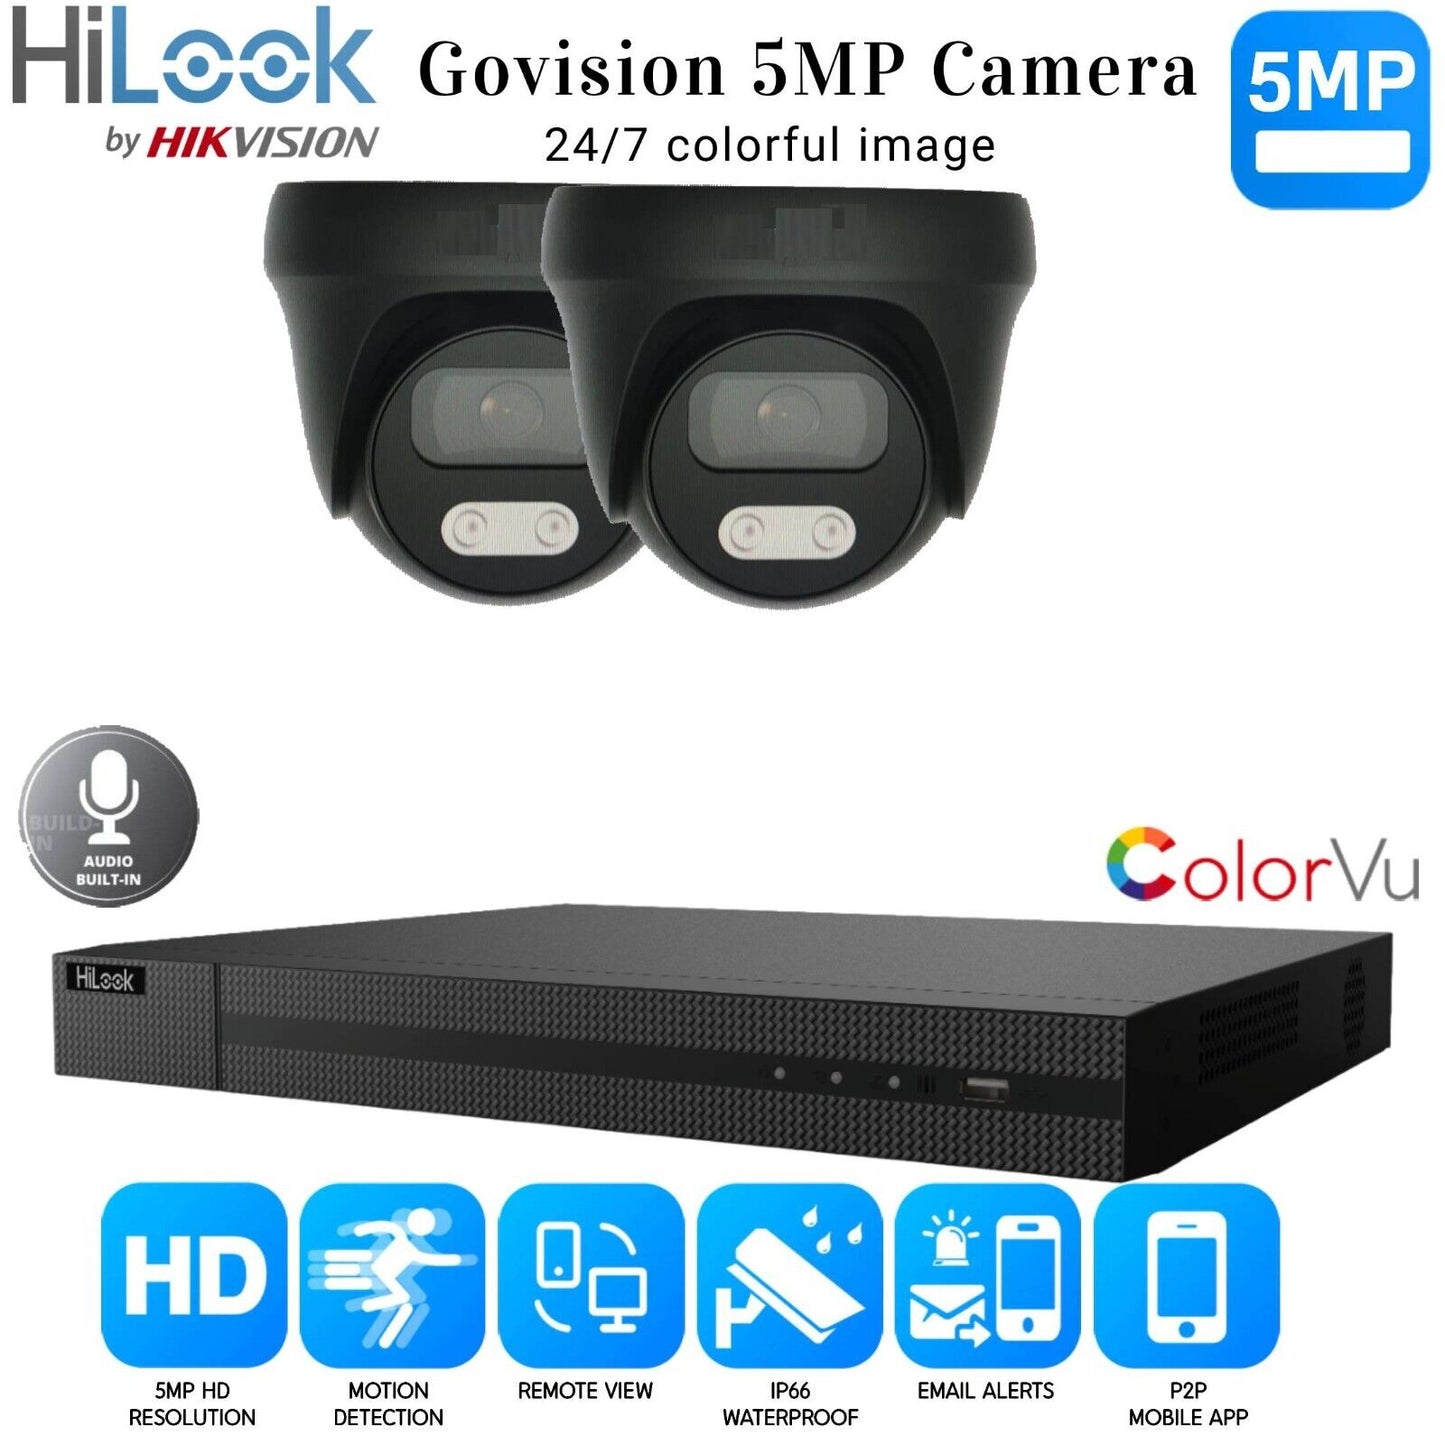 HIKVISION COLORVU CCTV SYSTEM HD 5MP 24/7 COLORVu CAMERA KIT UK 4CH DVR 2x Cameras (gray) 1TB HDD